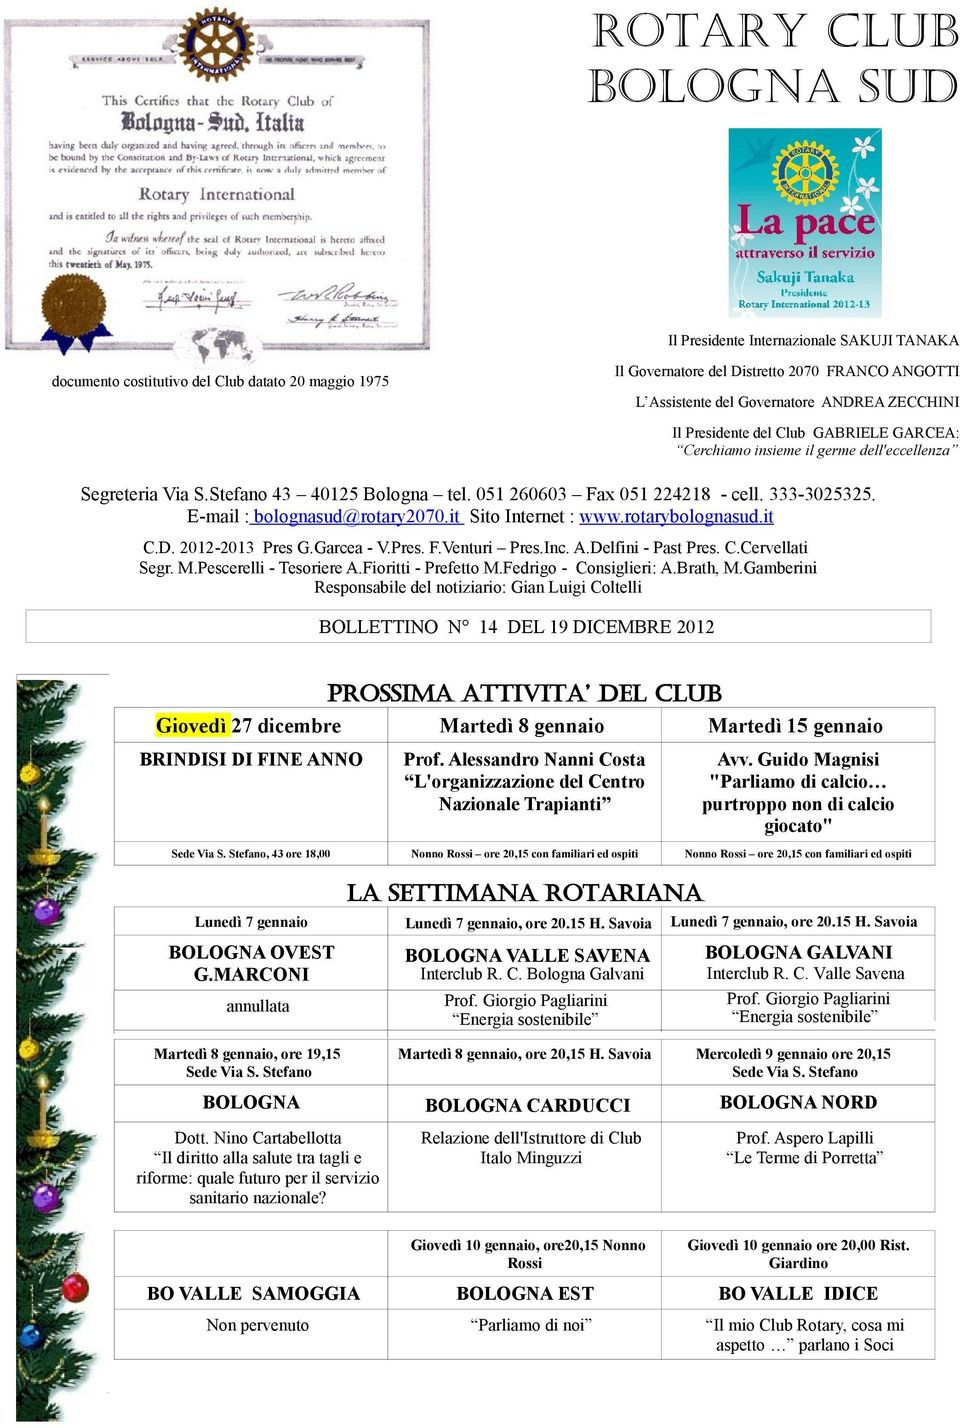 E-mail : bolognasud@rotary2070.it Sito Internet : www.rotarybolognasud.it C.D. 2012-2013 Pres G.Garcea - V.Pres. F.Venturi Pres.Inc. A.Delfini - Past Pres. C.Cervellati Segr. M.